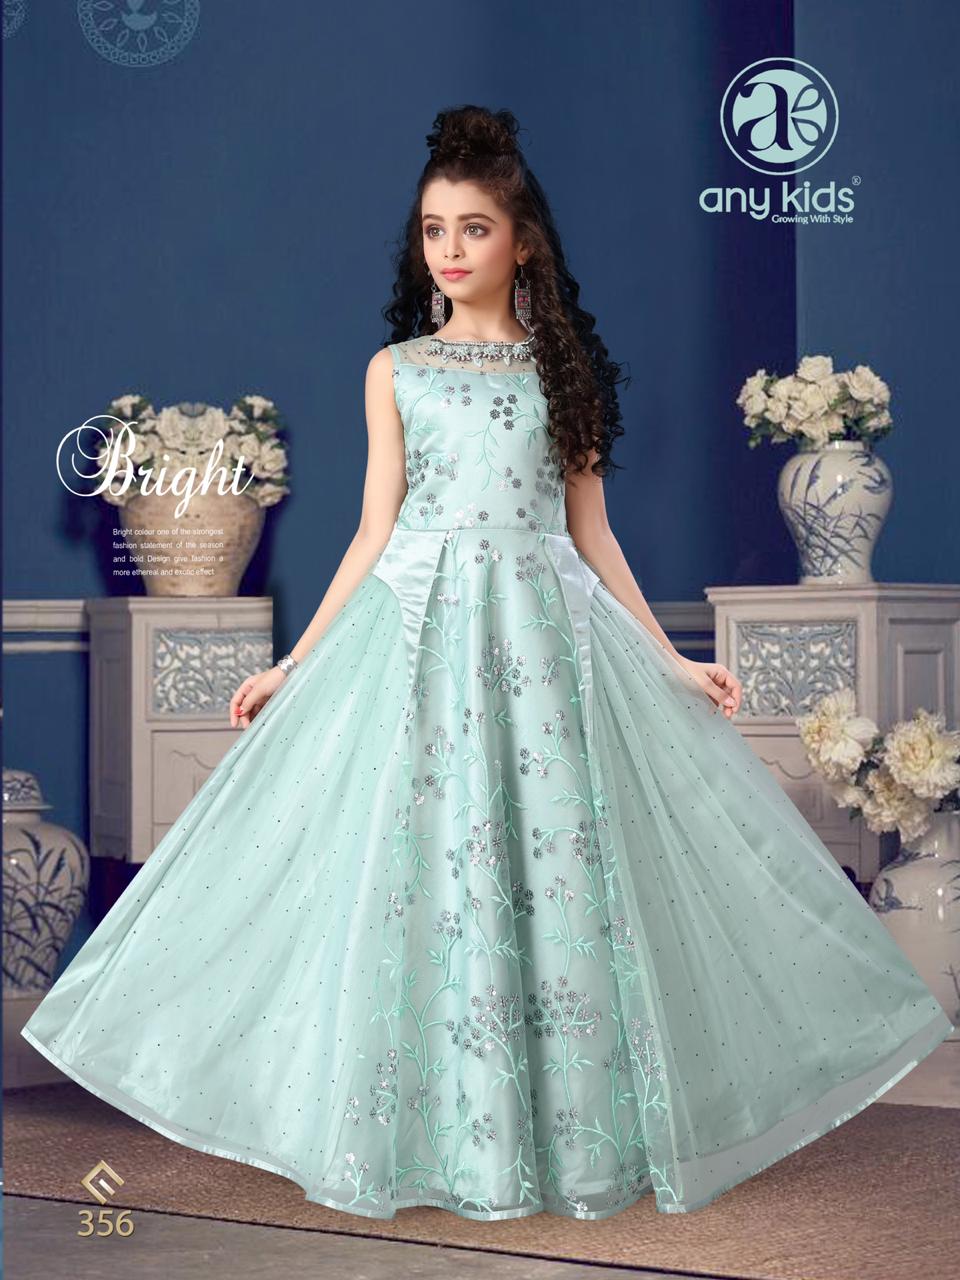 Any Kids Presents D.no.356 Exclusive Designer Kidswear Butterfly Net Work Gown Catalog Wholesaler In Surat